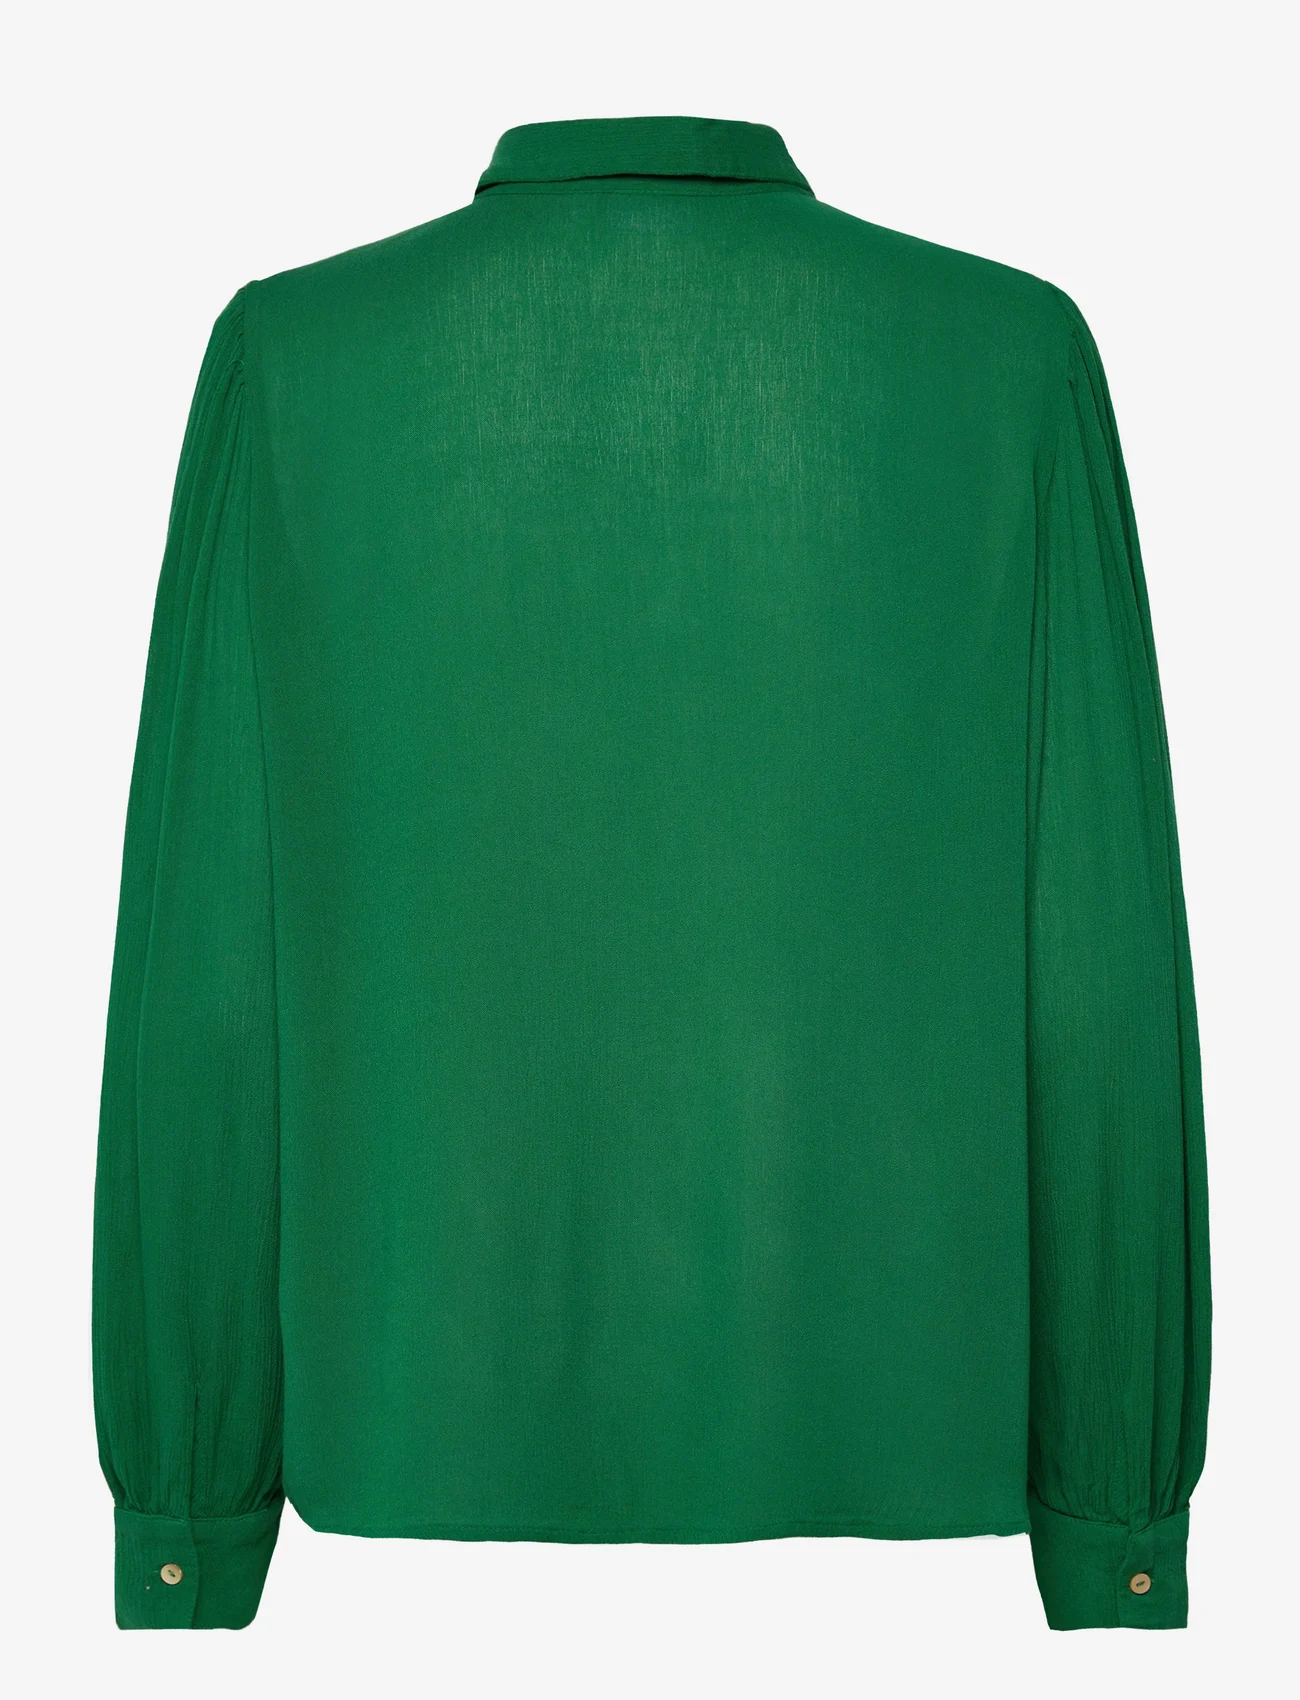 Saint Tropez - AlbaSZ Shirt - långärmade skjortor - verdant green - 1